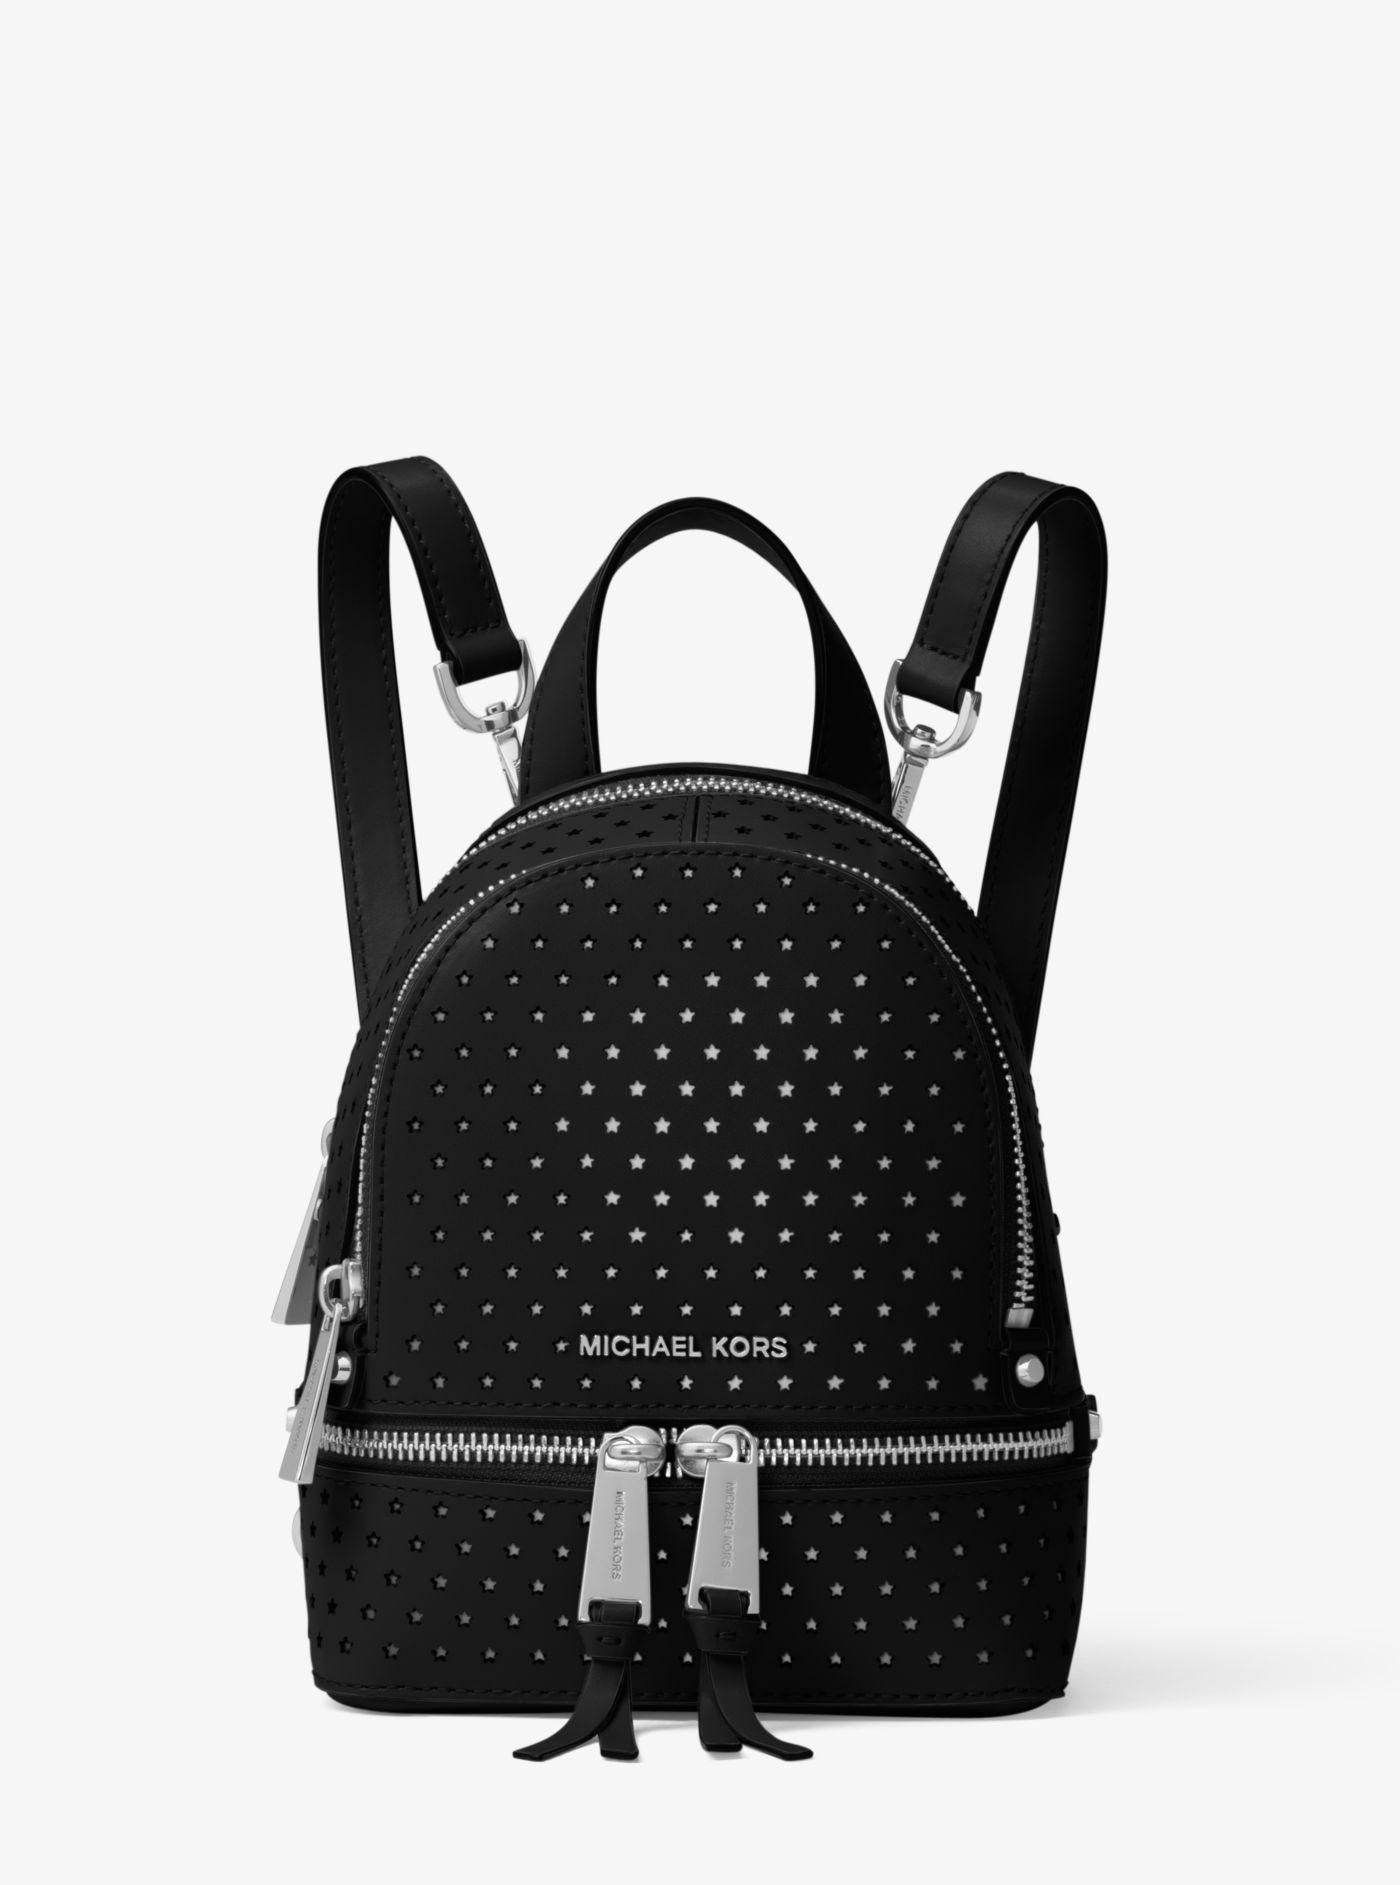 Lyst - Michael Kors Rhea Mini Perforated Leather Backpack in Black